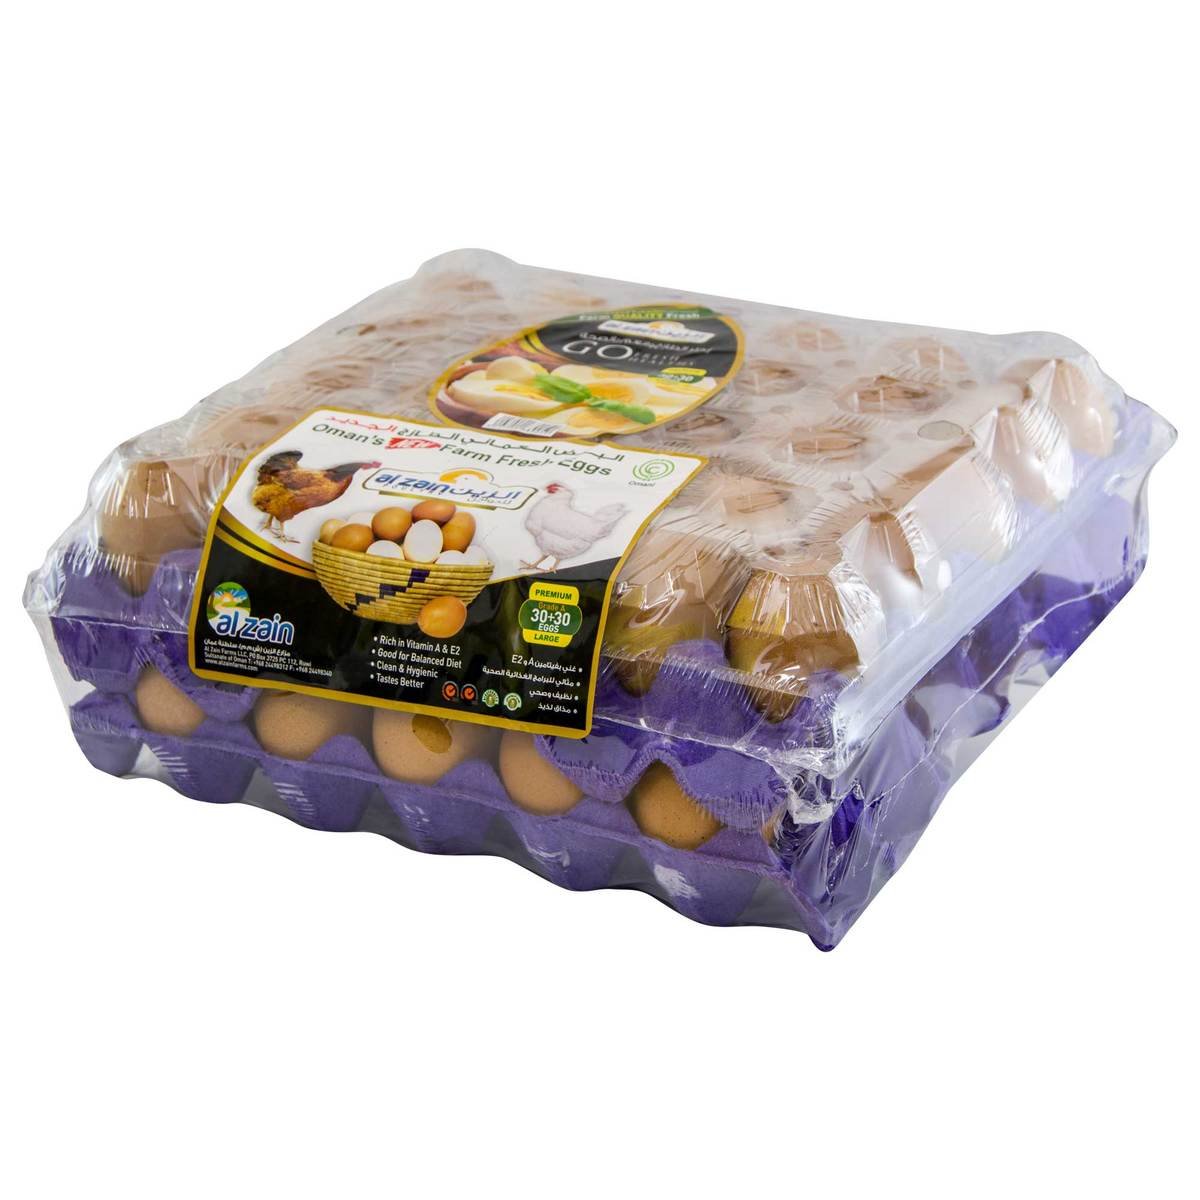 Al Zain Oman's Farm Fresh Brown Eggs Large 2 x 30pcs